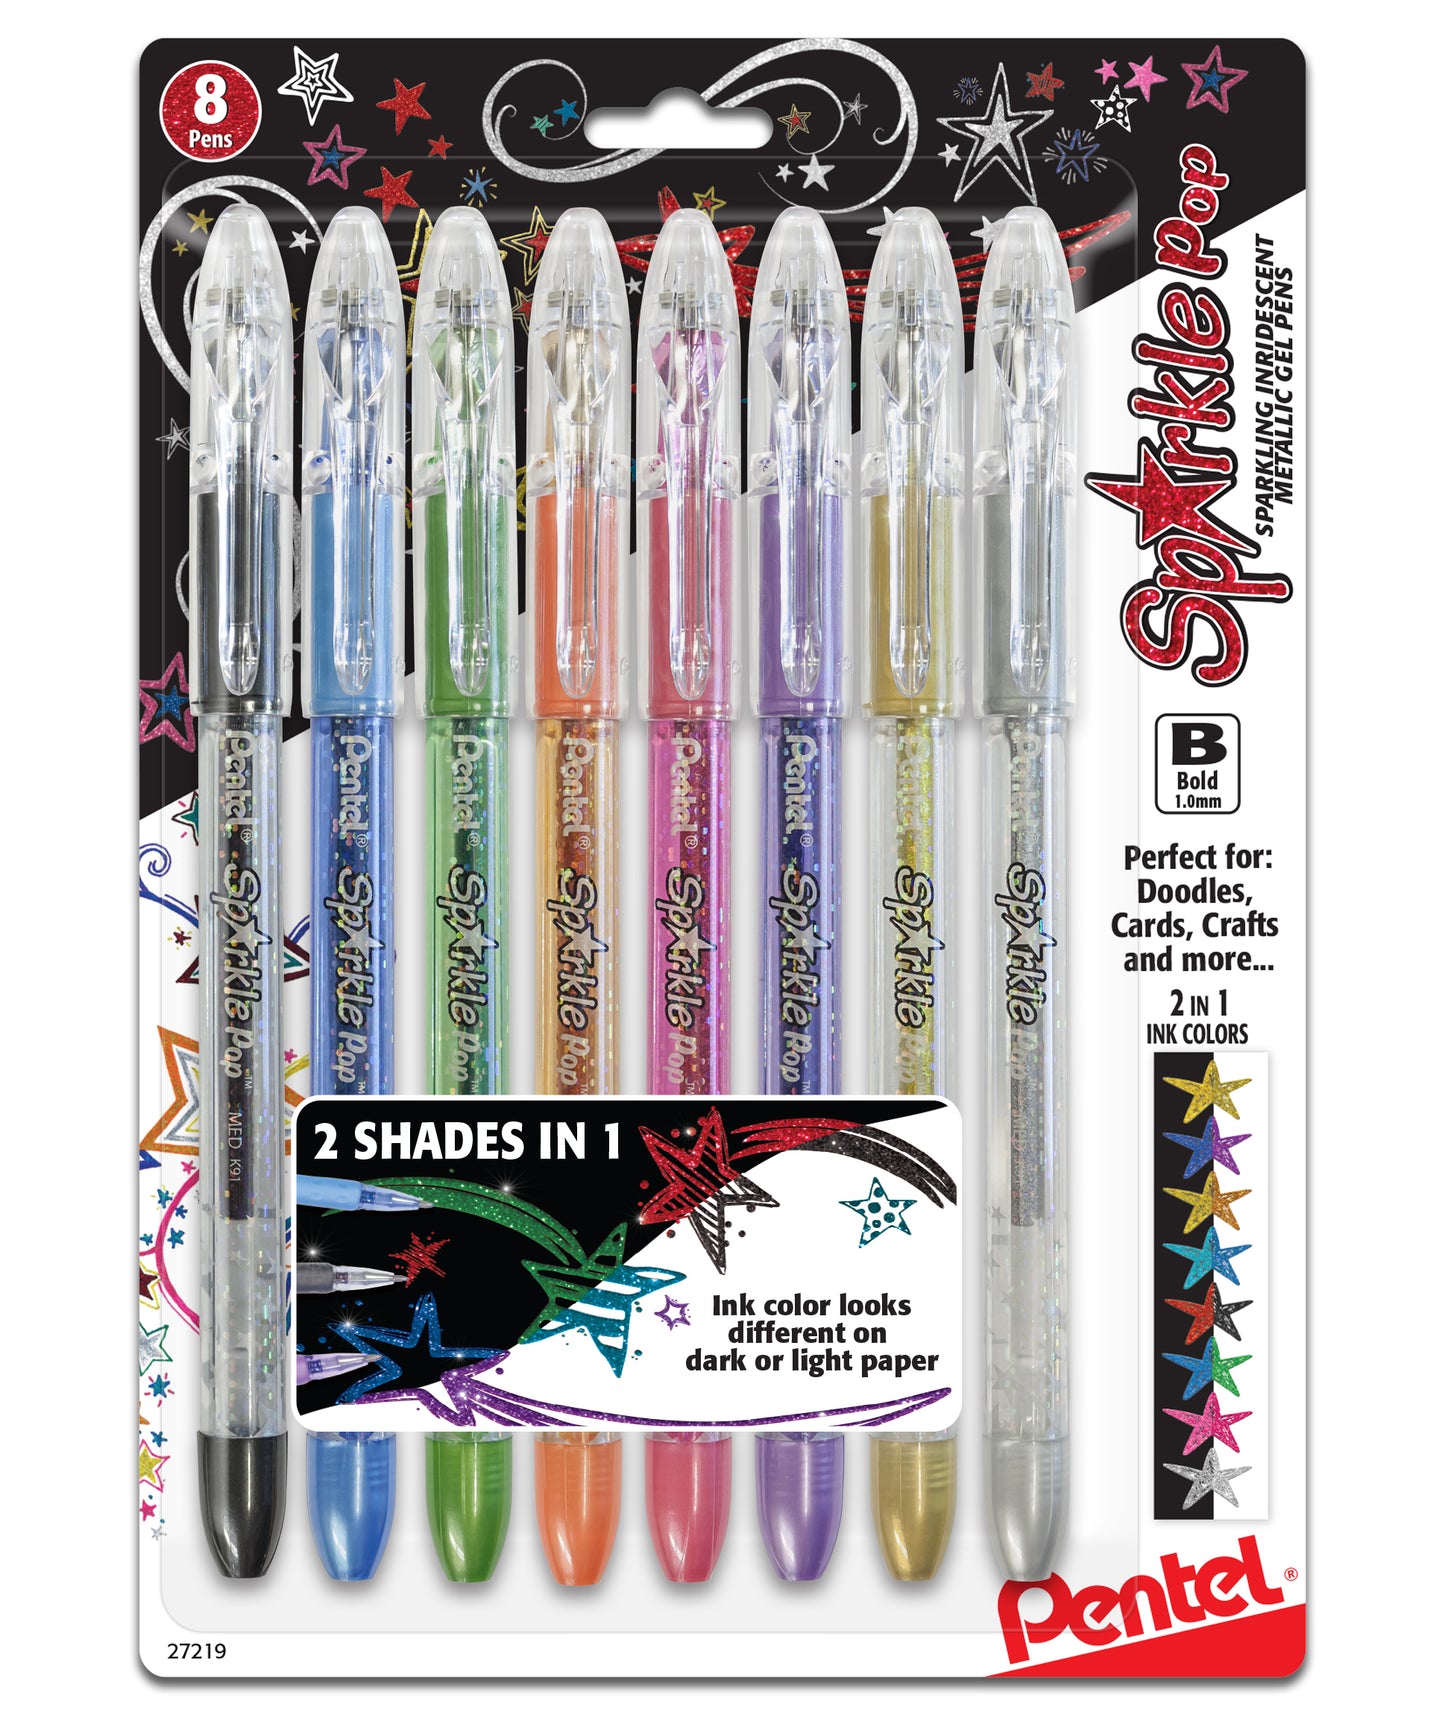 Glitter Gel Pens, 100-Color Neon Glitter Pens Fine Tip Art Markers